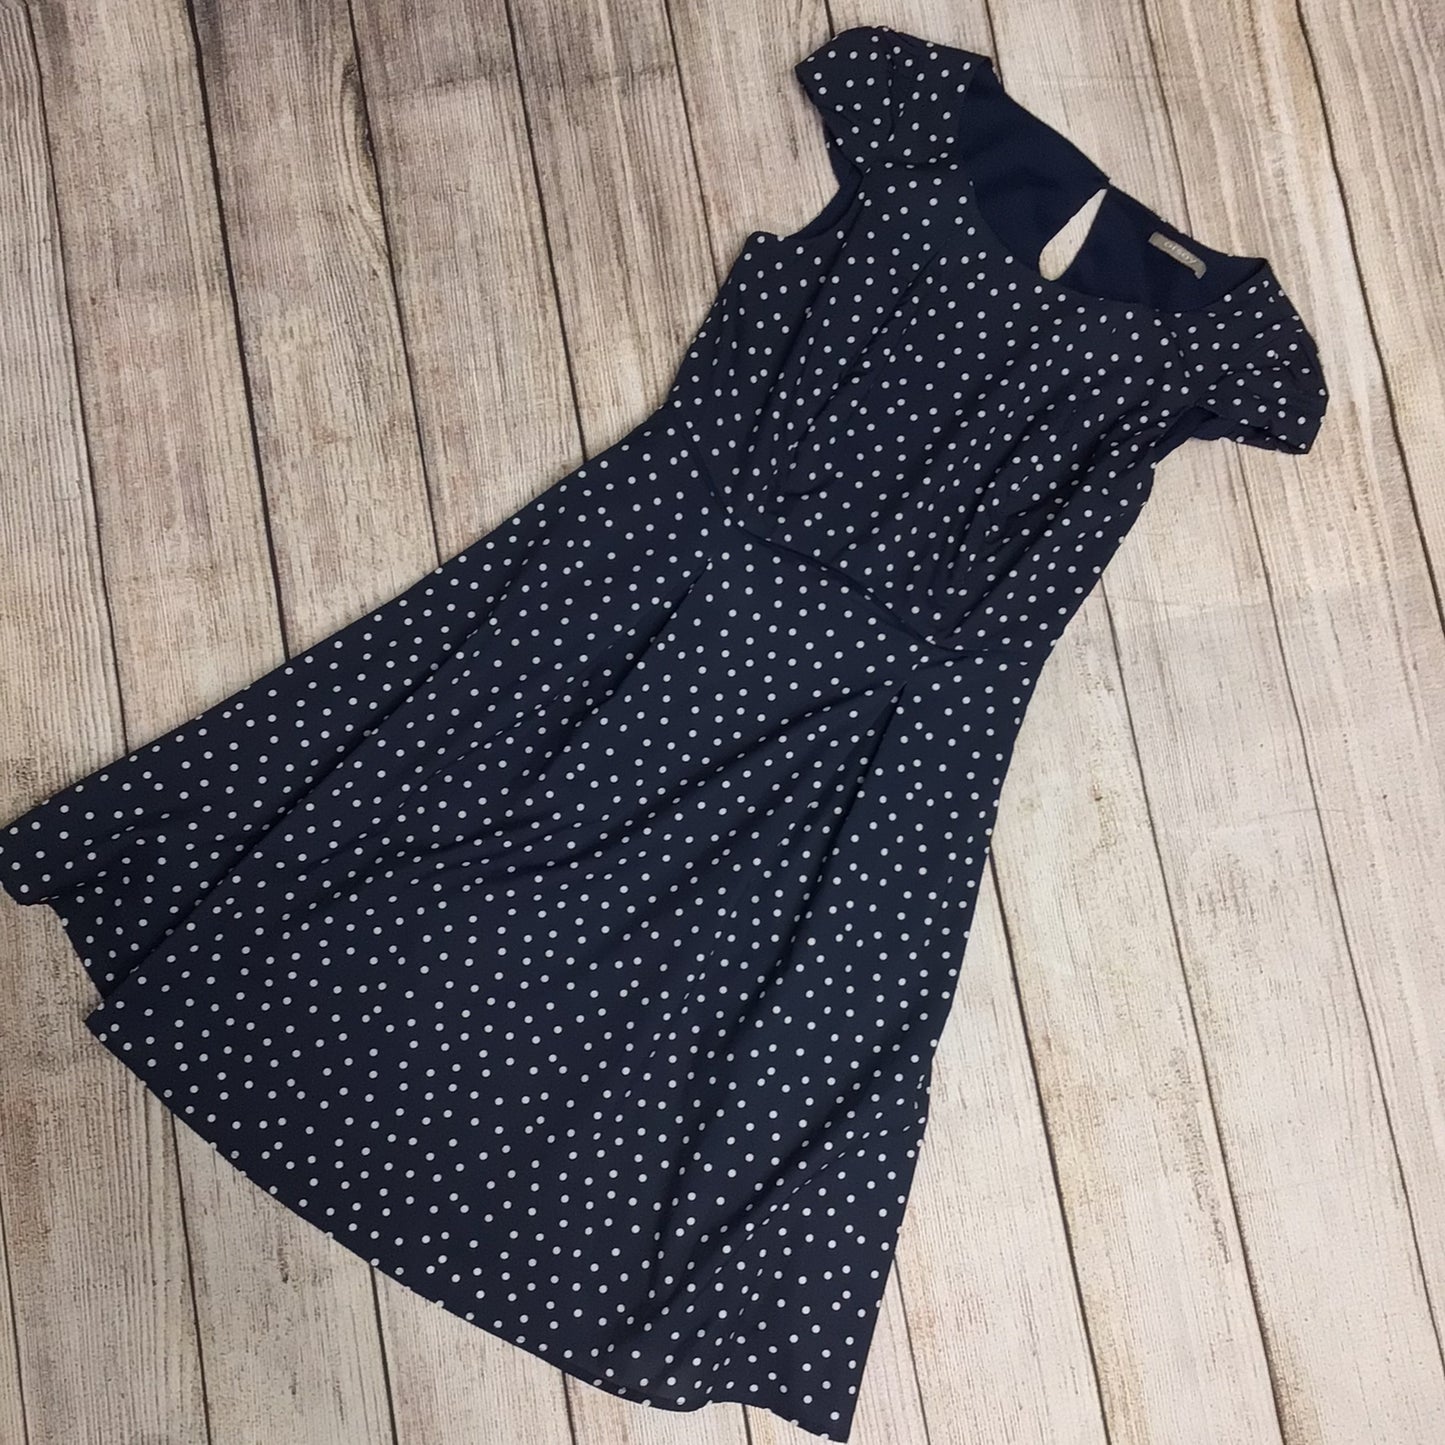 Orsay Blue & White Spotty Skater Dress w/Cap Sleeve Size 6 (size 34 on label)